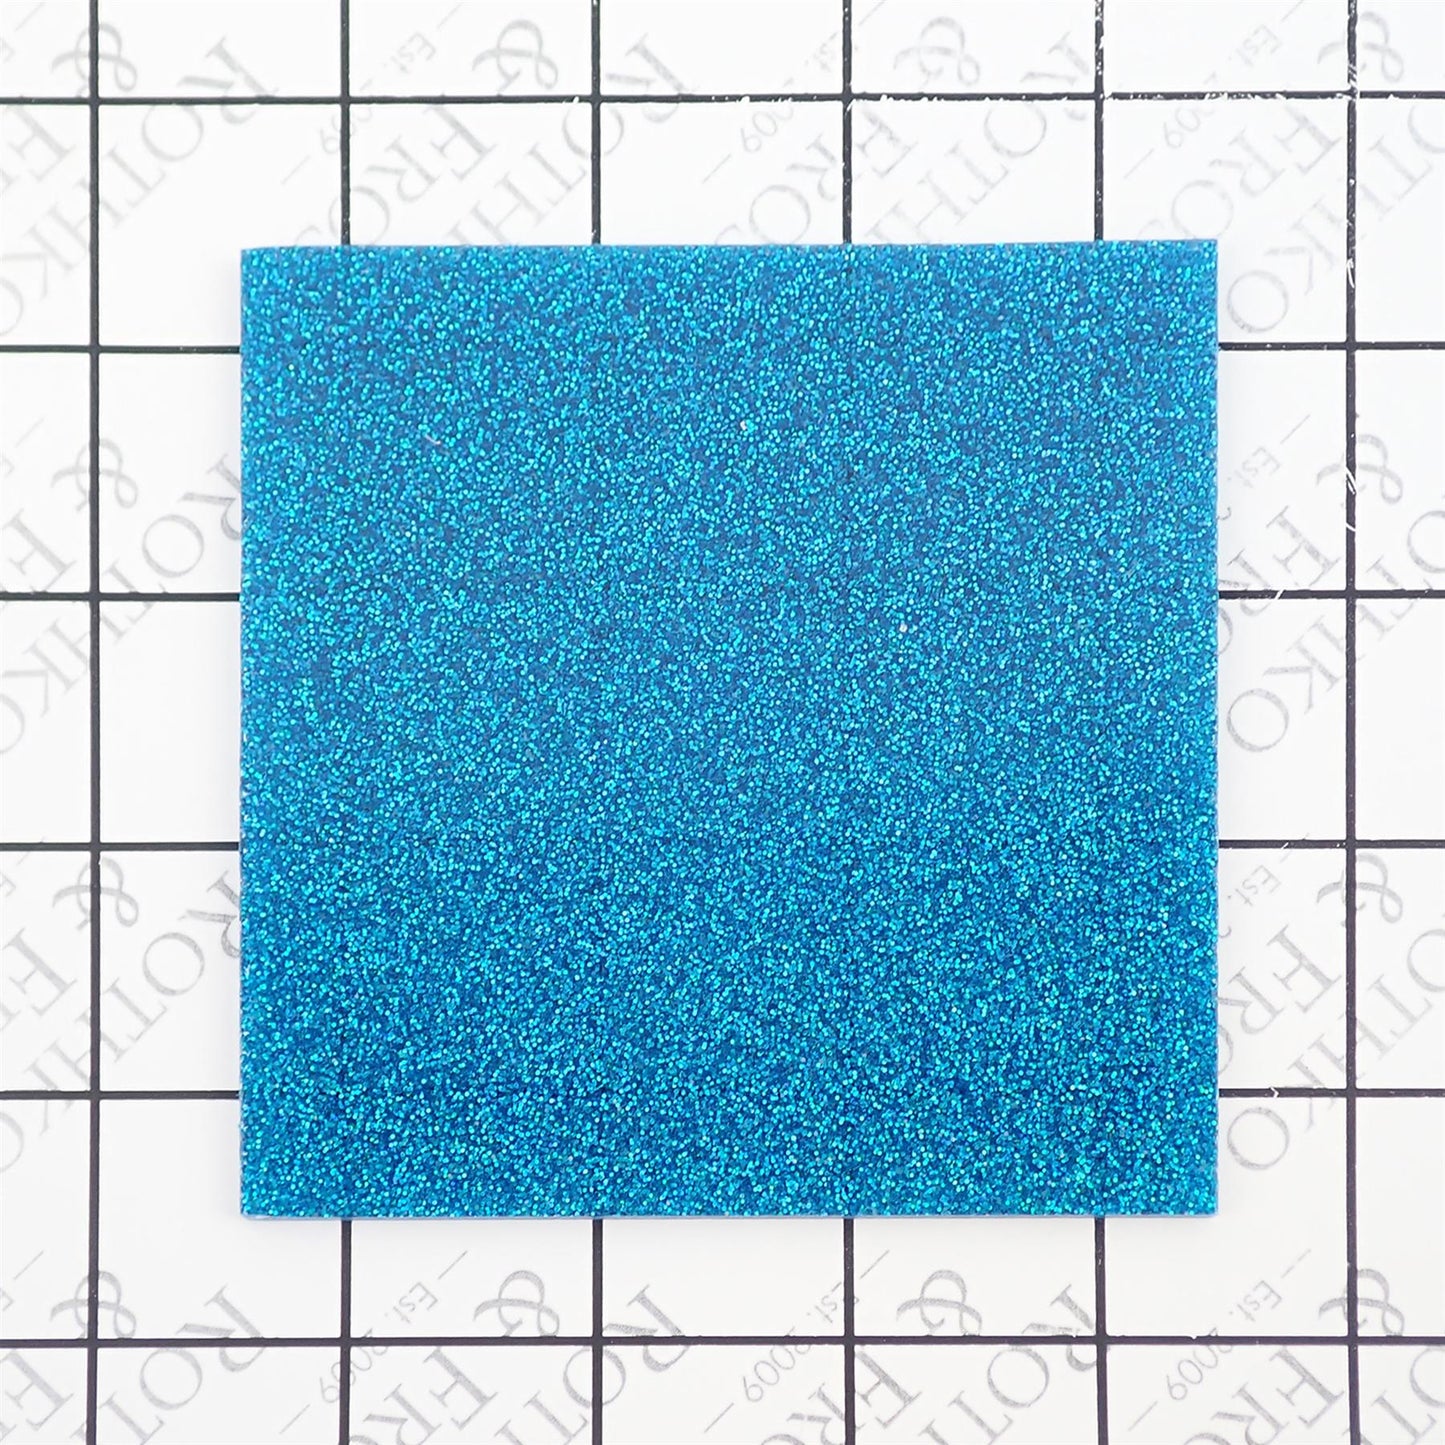 Incudo Cyan Blue Holographic Glitter Acrylic Sheet - 300x250x3mm